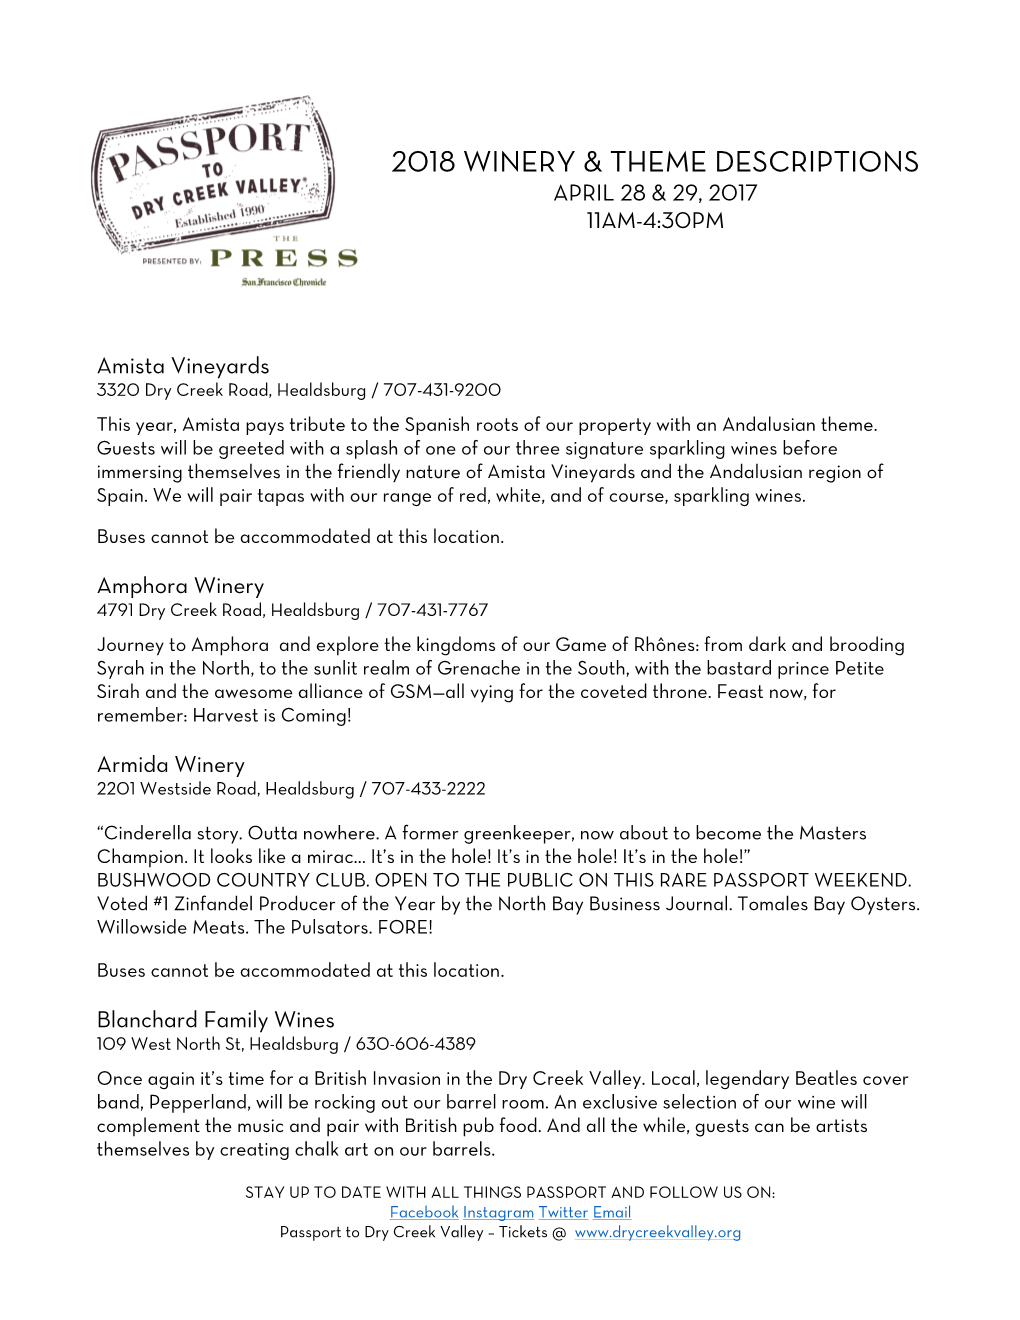 2018 Winery & Theme Descriptions